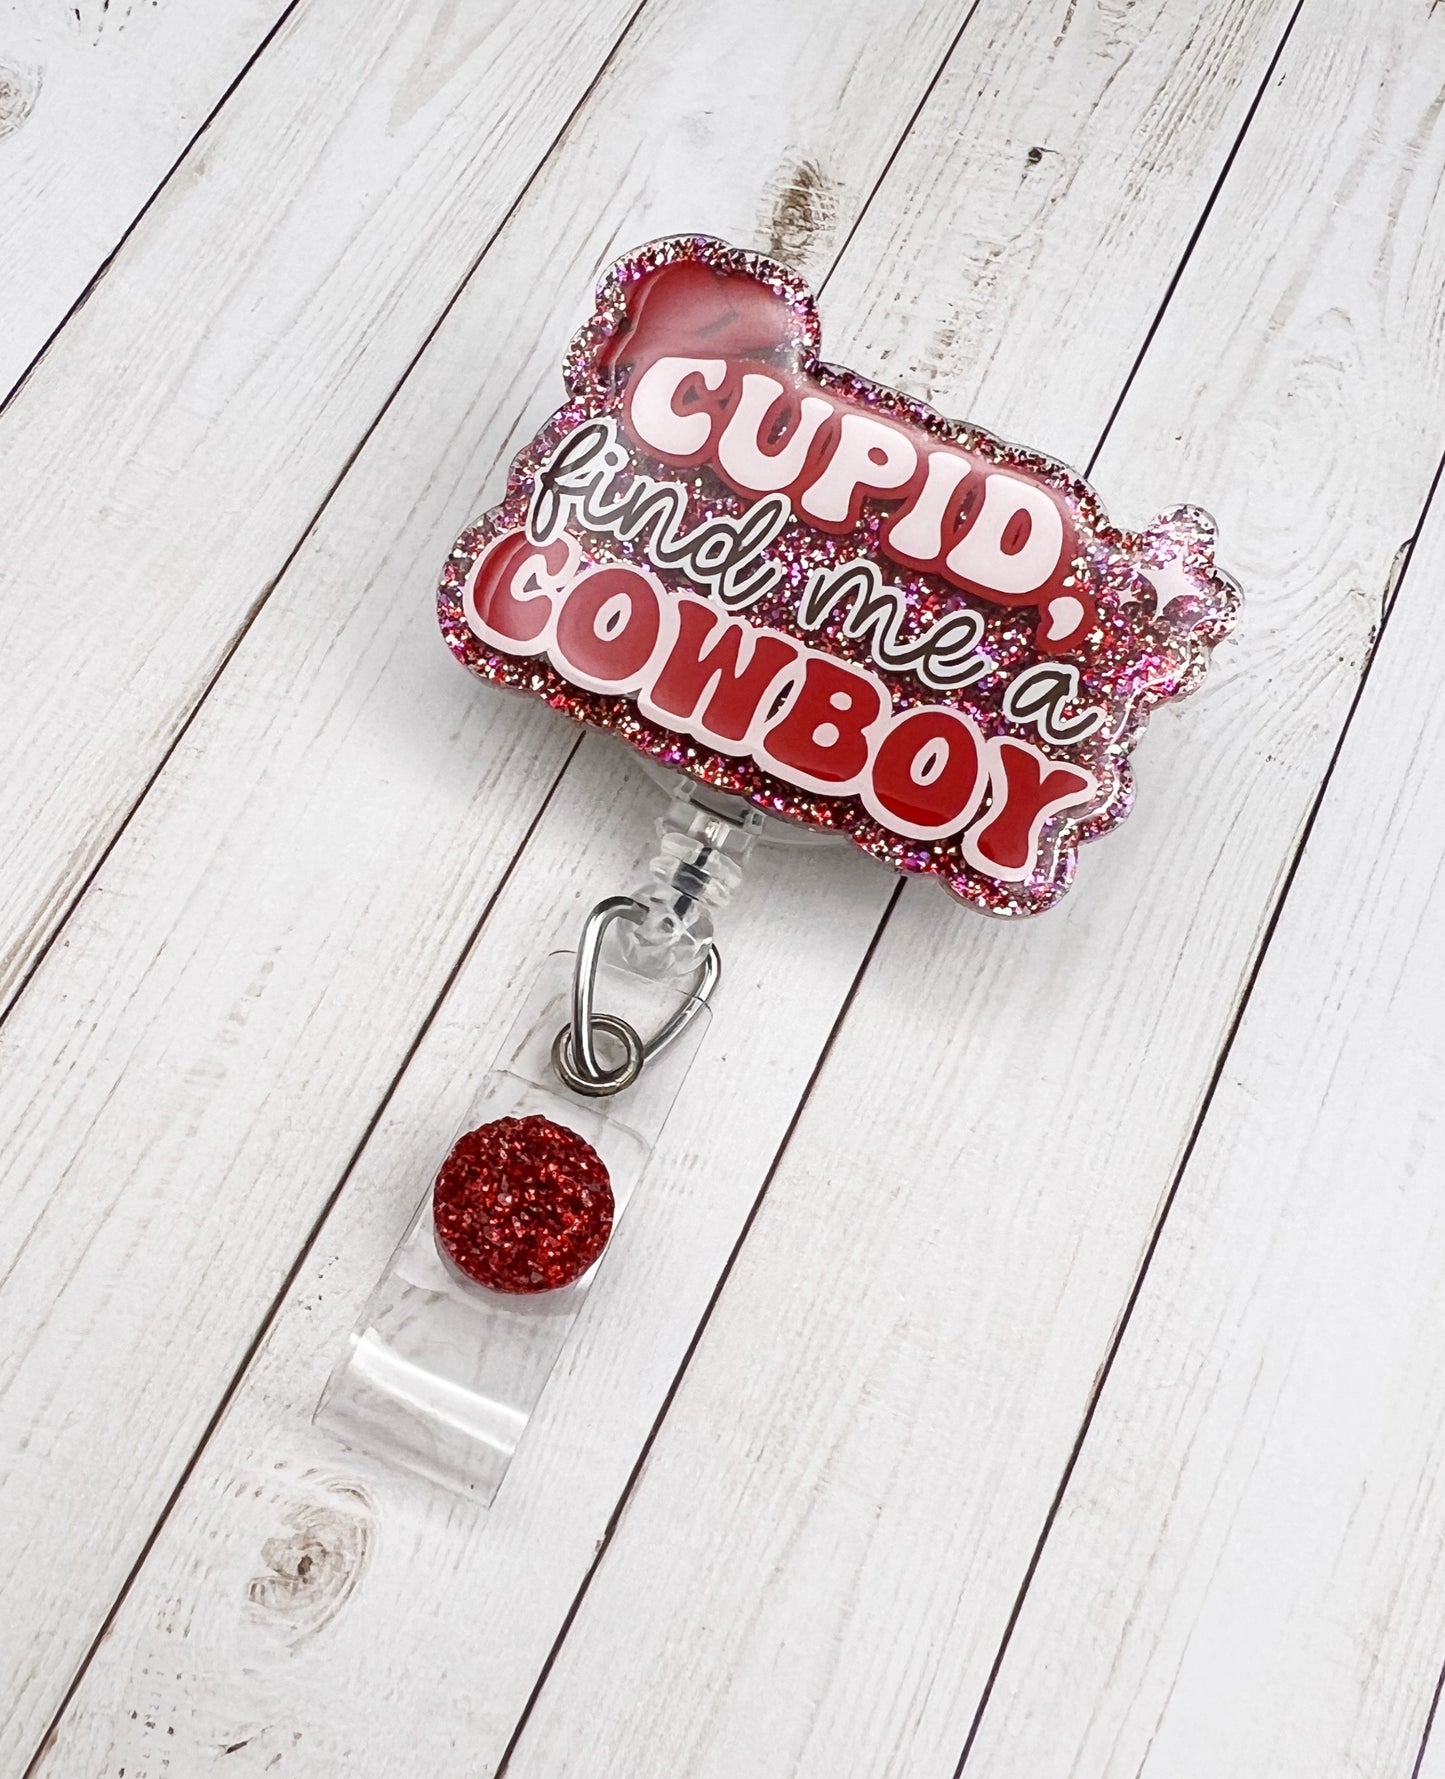 Cupid, Find Me A Cowboy